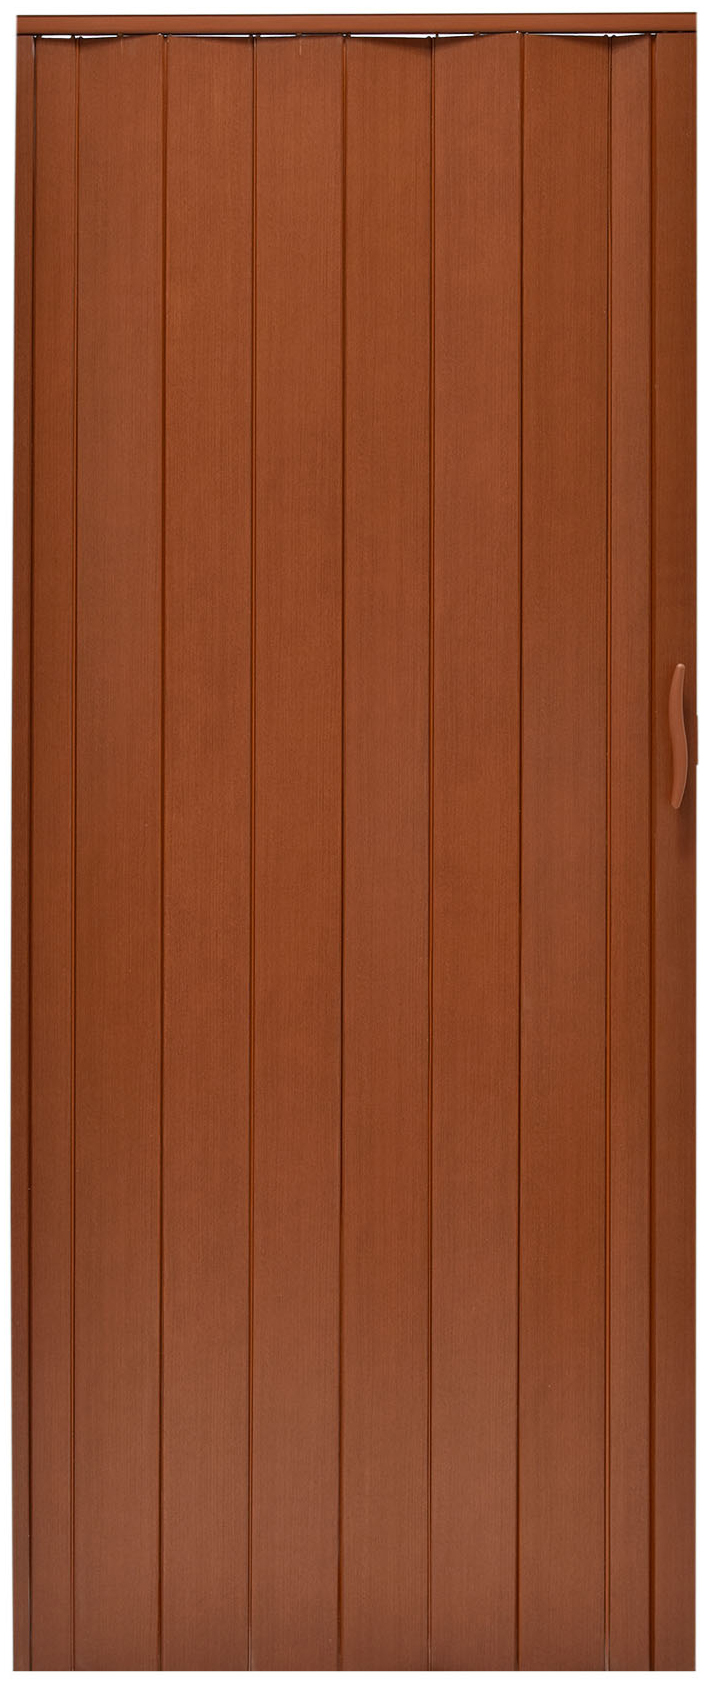 Drzwi harmonijkowe 001P-80 ciemny calvados 80 cm